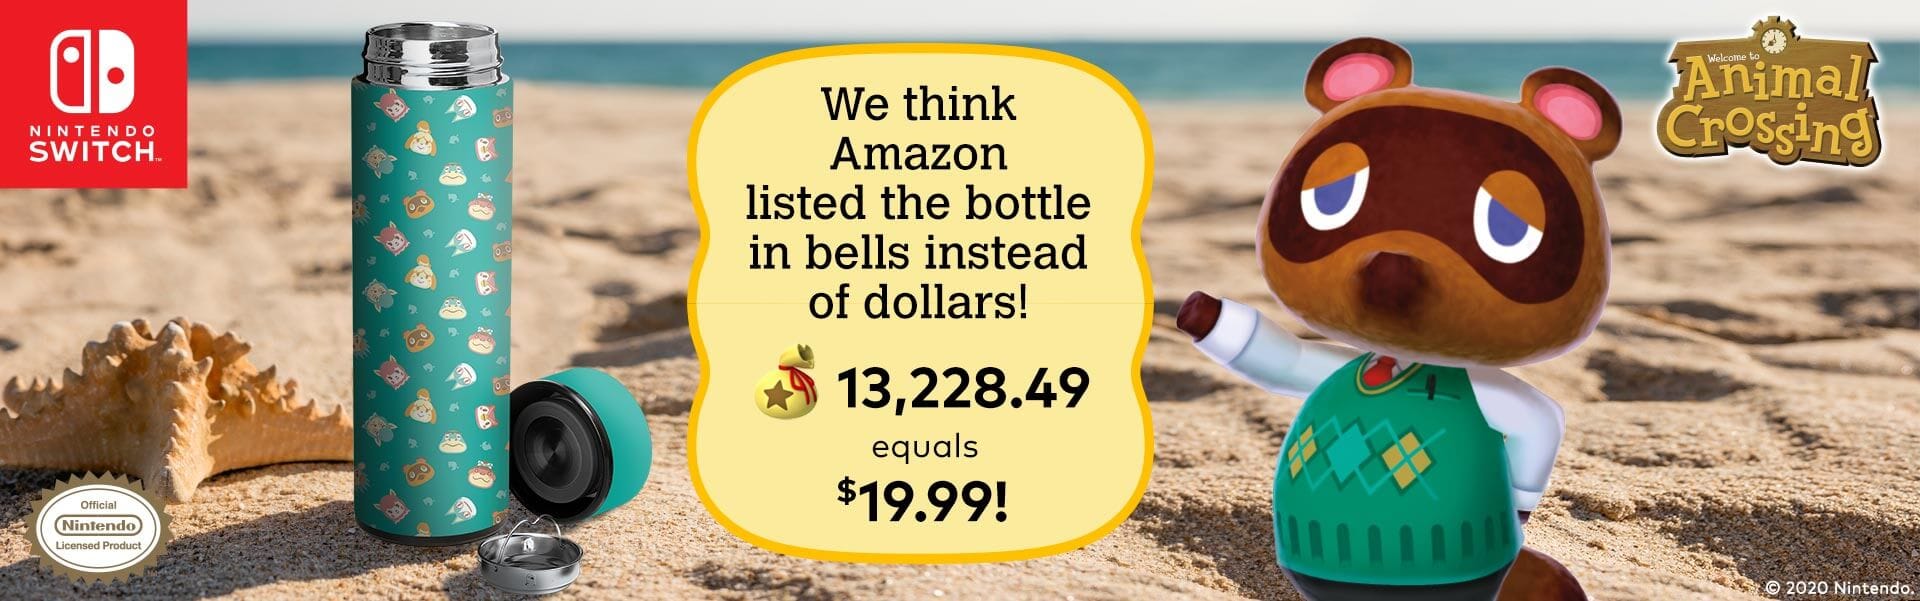 Animal Crossing Bottle Price in Bells